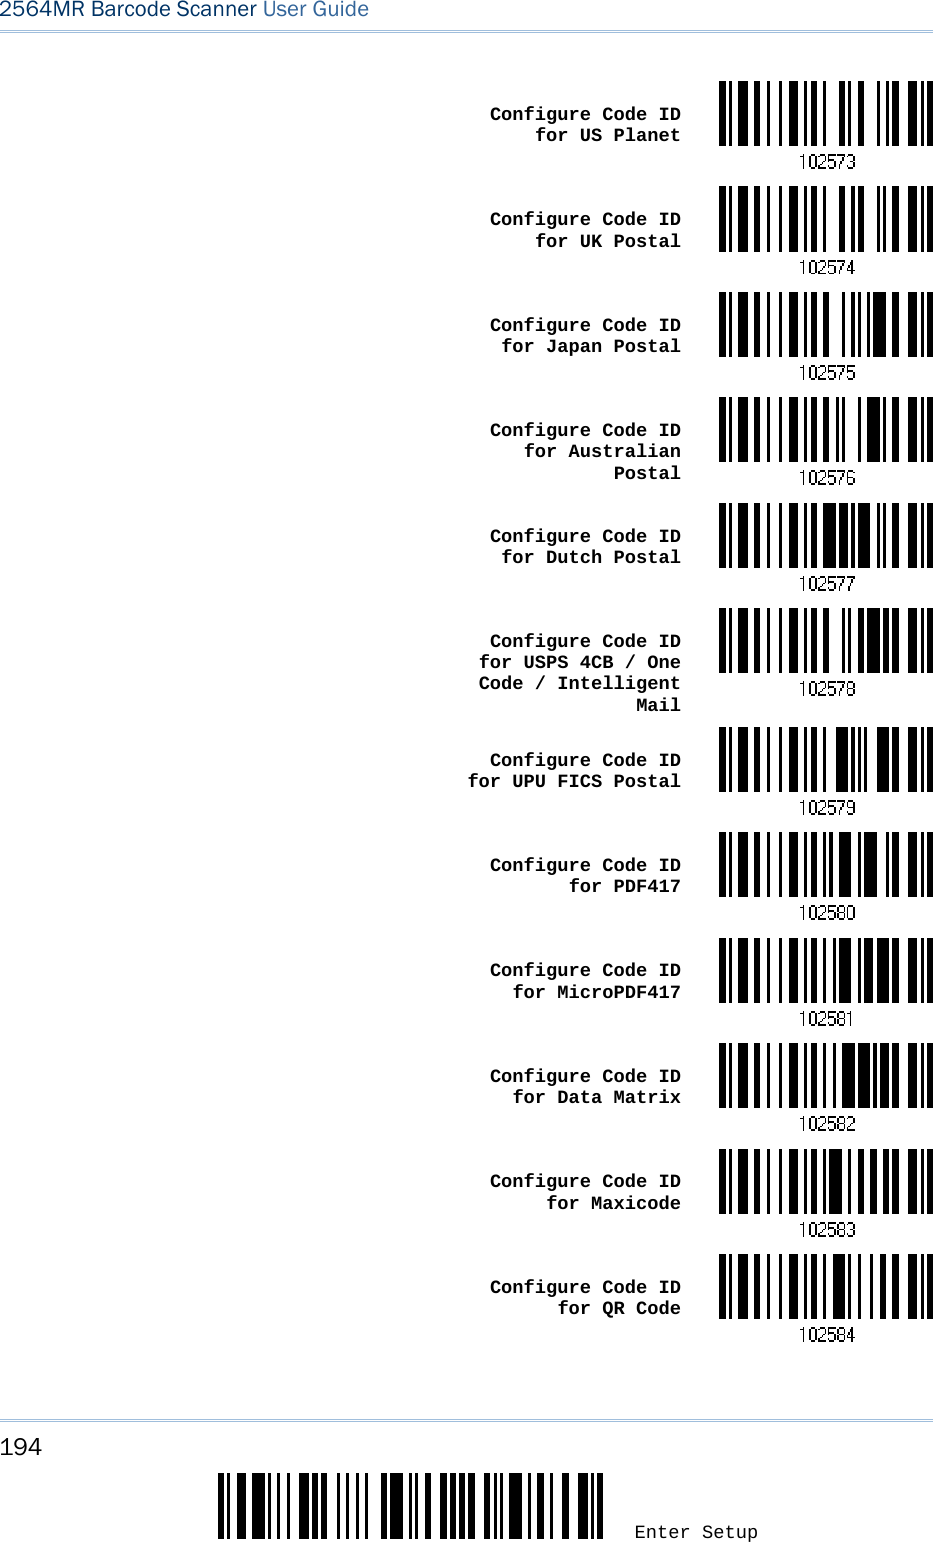 194 Enter Setup 2564MR Barcode Scanner User Guide   Configure Code ID for US Planet  Configure Code ID for UK Postal  Configure Code ID for Japan Postal  Configure Code ID for Australian Postal Configure Code ID for Dutch Postal  Configure Code ID for USPS 4CB / One Code / Intelligent Mail  Configure Code ID for UPU FICS Postal Configure Code ID for PDF417  Configure Code ID for MicroPDF417  Configure Code ID for Data Matrix  Configure Code ID for Maxicode  Configure Code ID for QR Code 